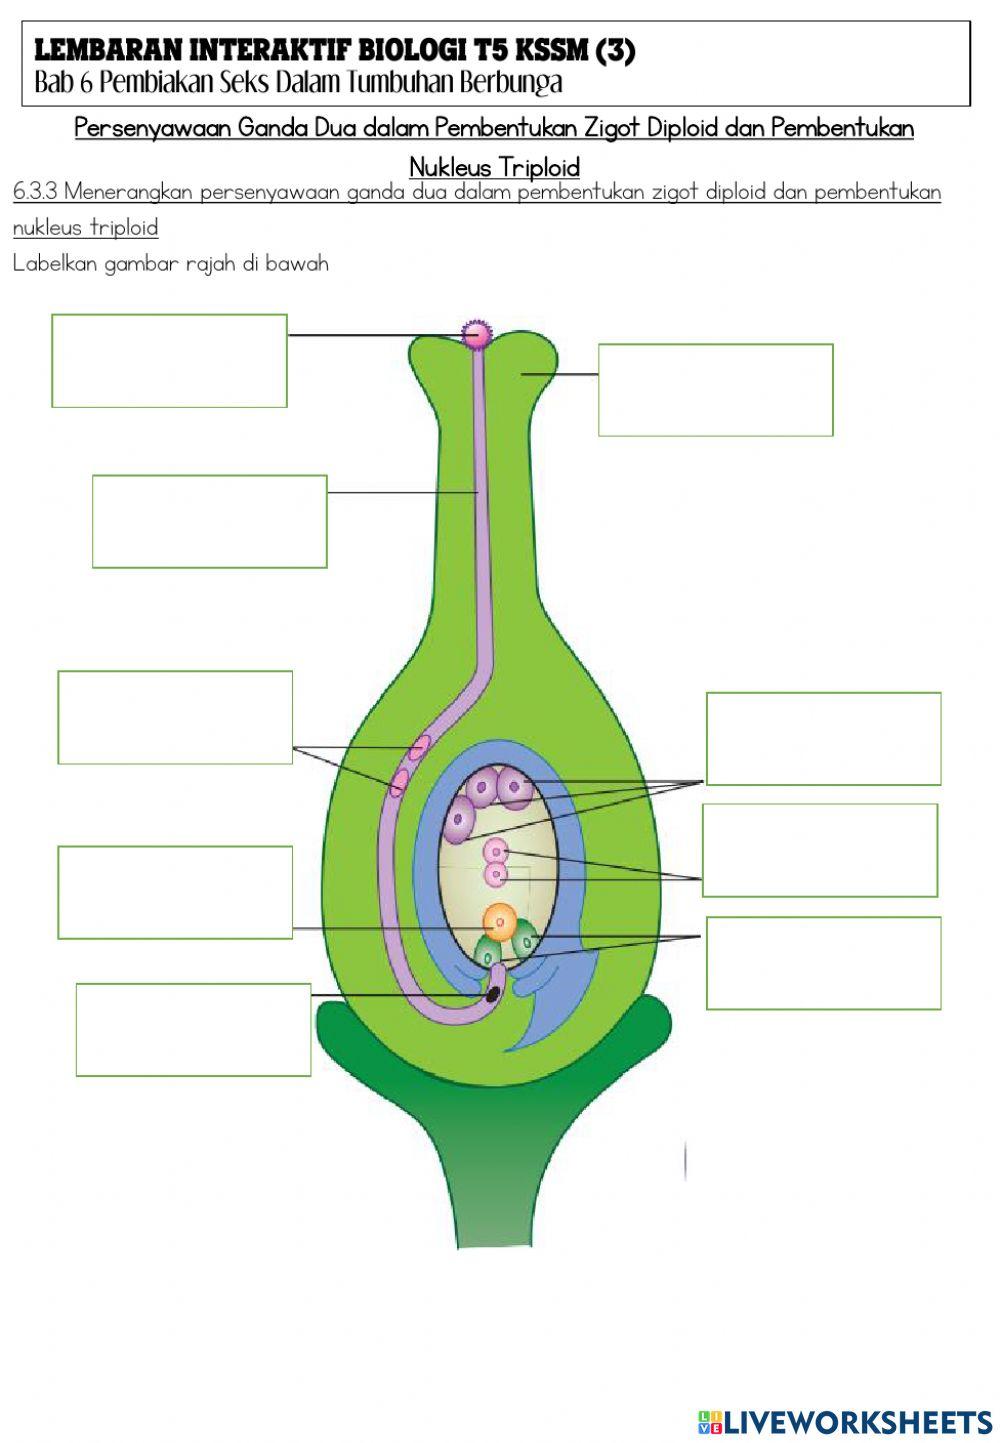 Biologi tingkatan 5 kssm bab 6 Pembiakan Seks dalam Tumbuhan Berbunga (Lembaran 3)